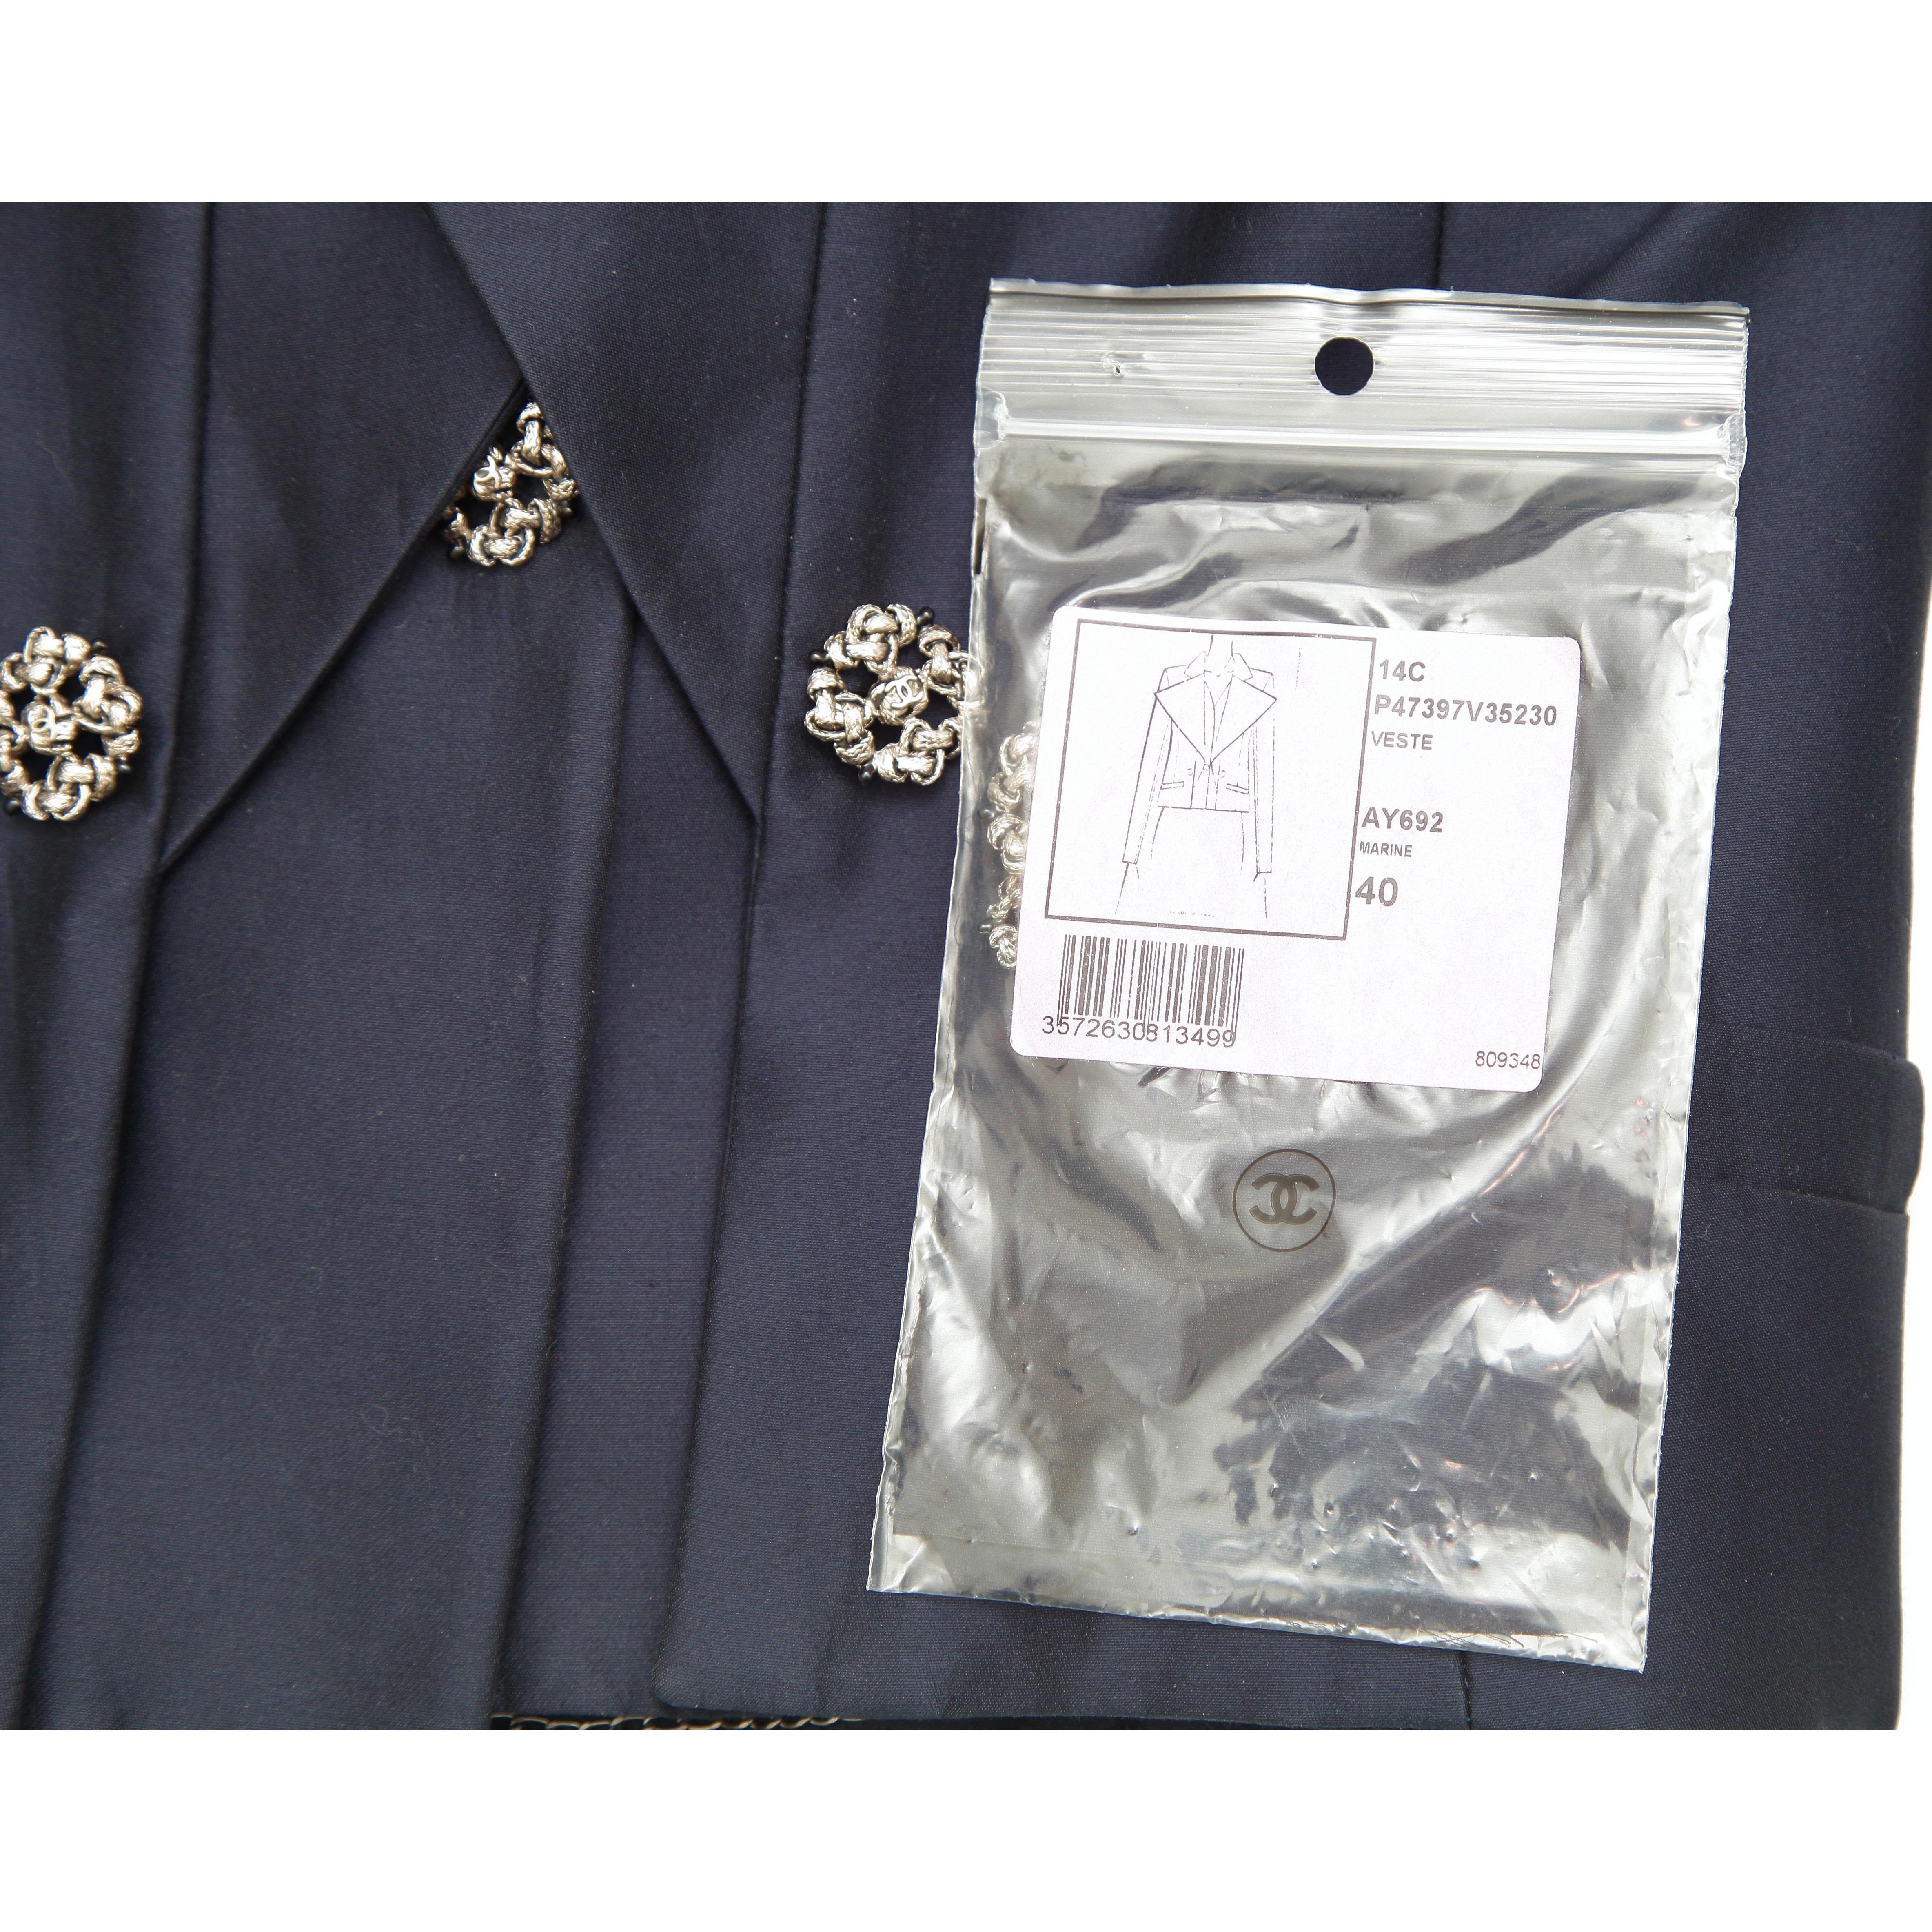 CHANEL Jacket Blazer Coat Navy Blue Silver Chain Long Sleeve Sz 40 2014 14C For Sale 8